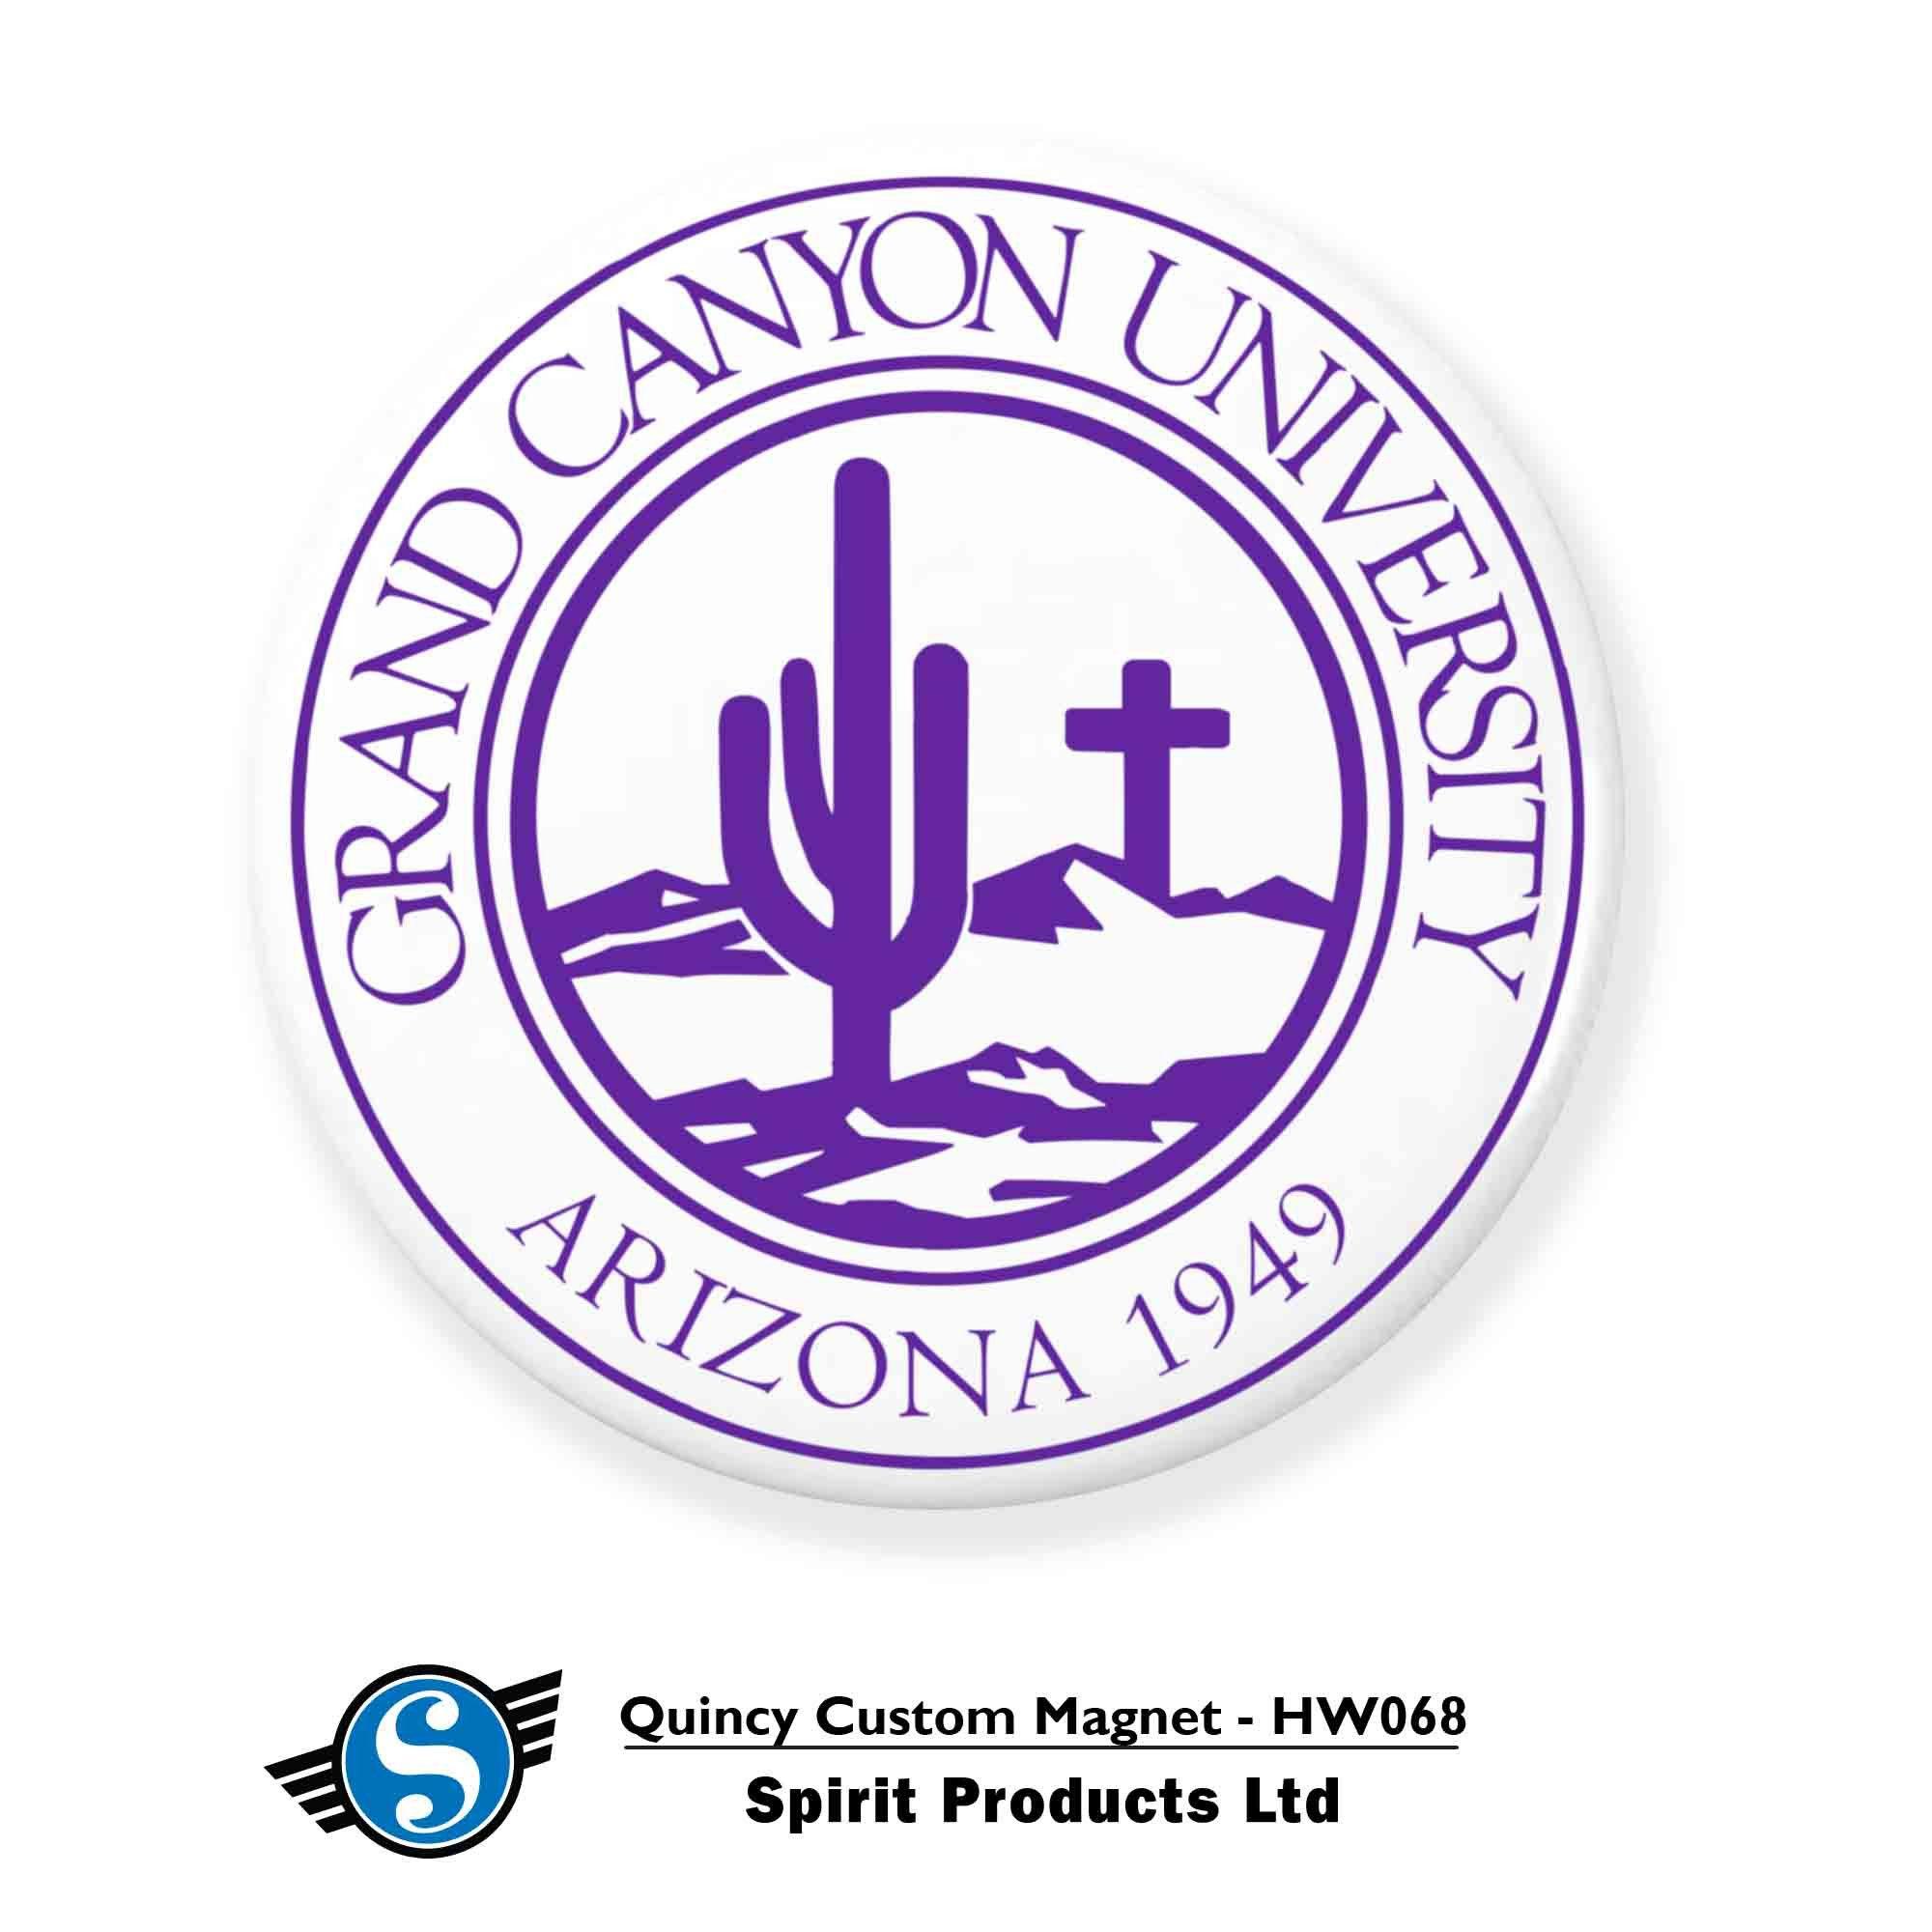 Grand Canyon University Basketball Logo - Grand Canyon University Seal Magnet